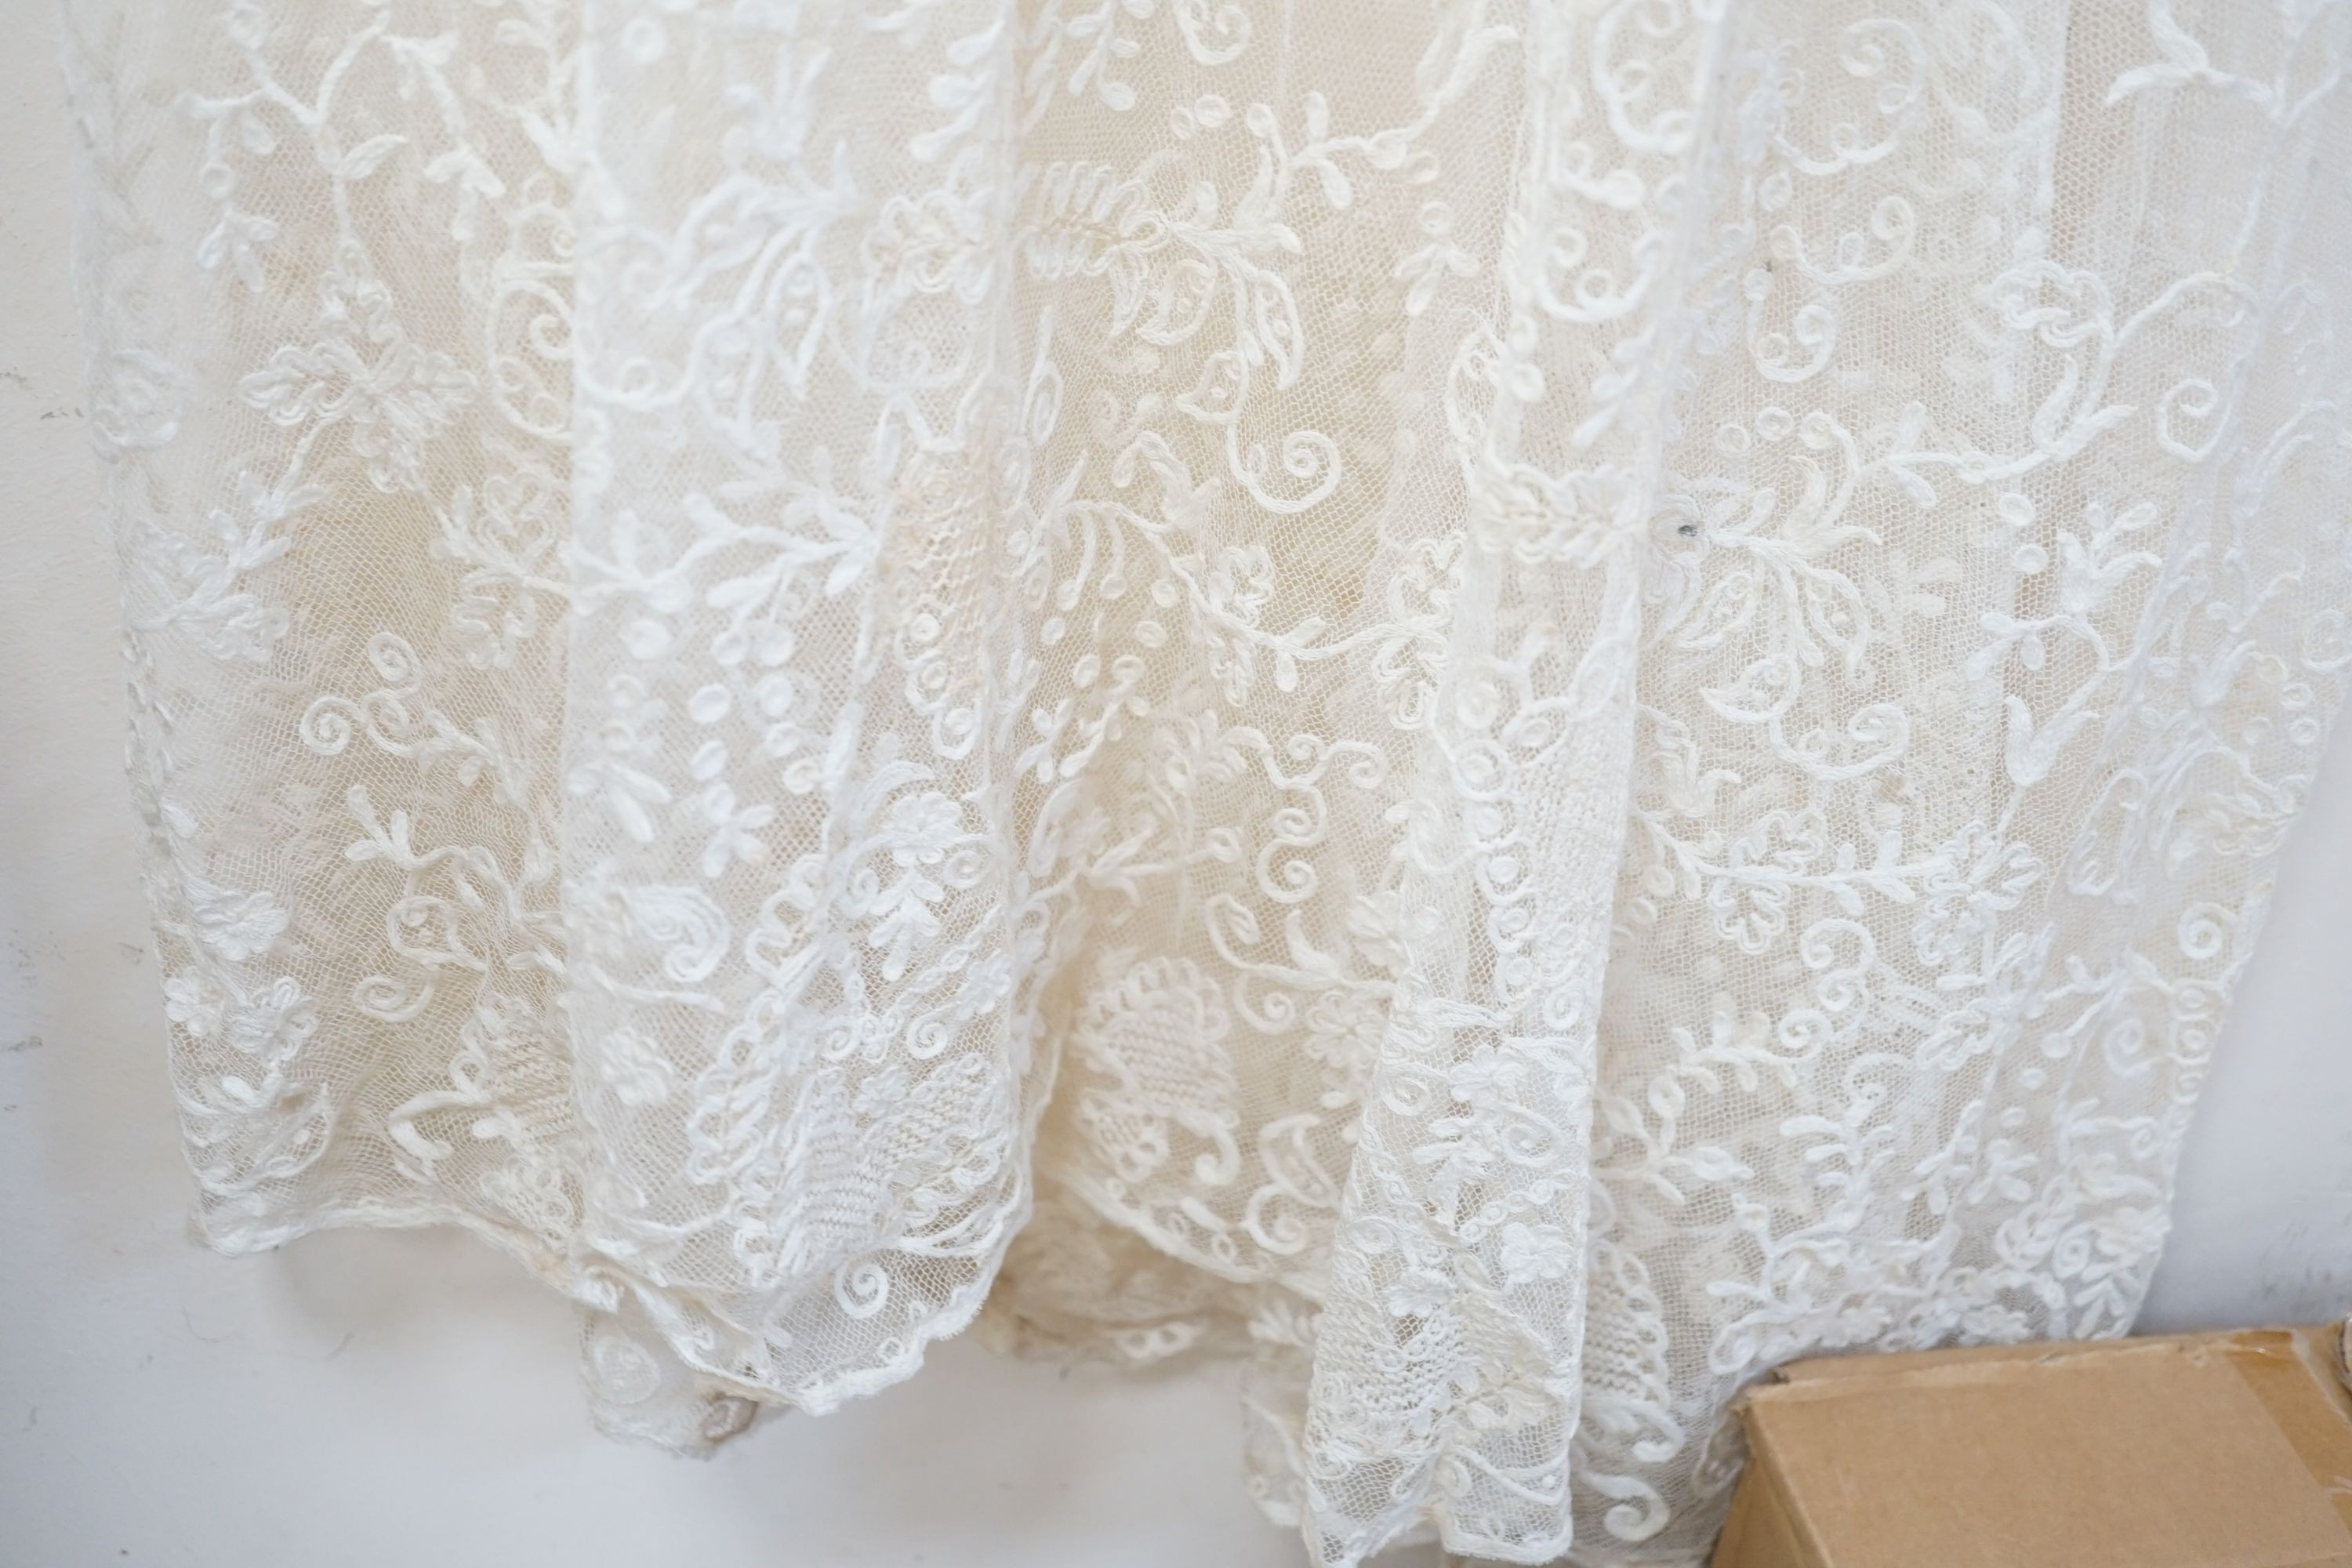 An early 20th century needle run on net lace wedding dress, 155 cms long.